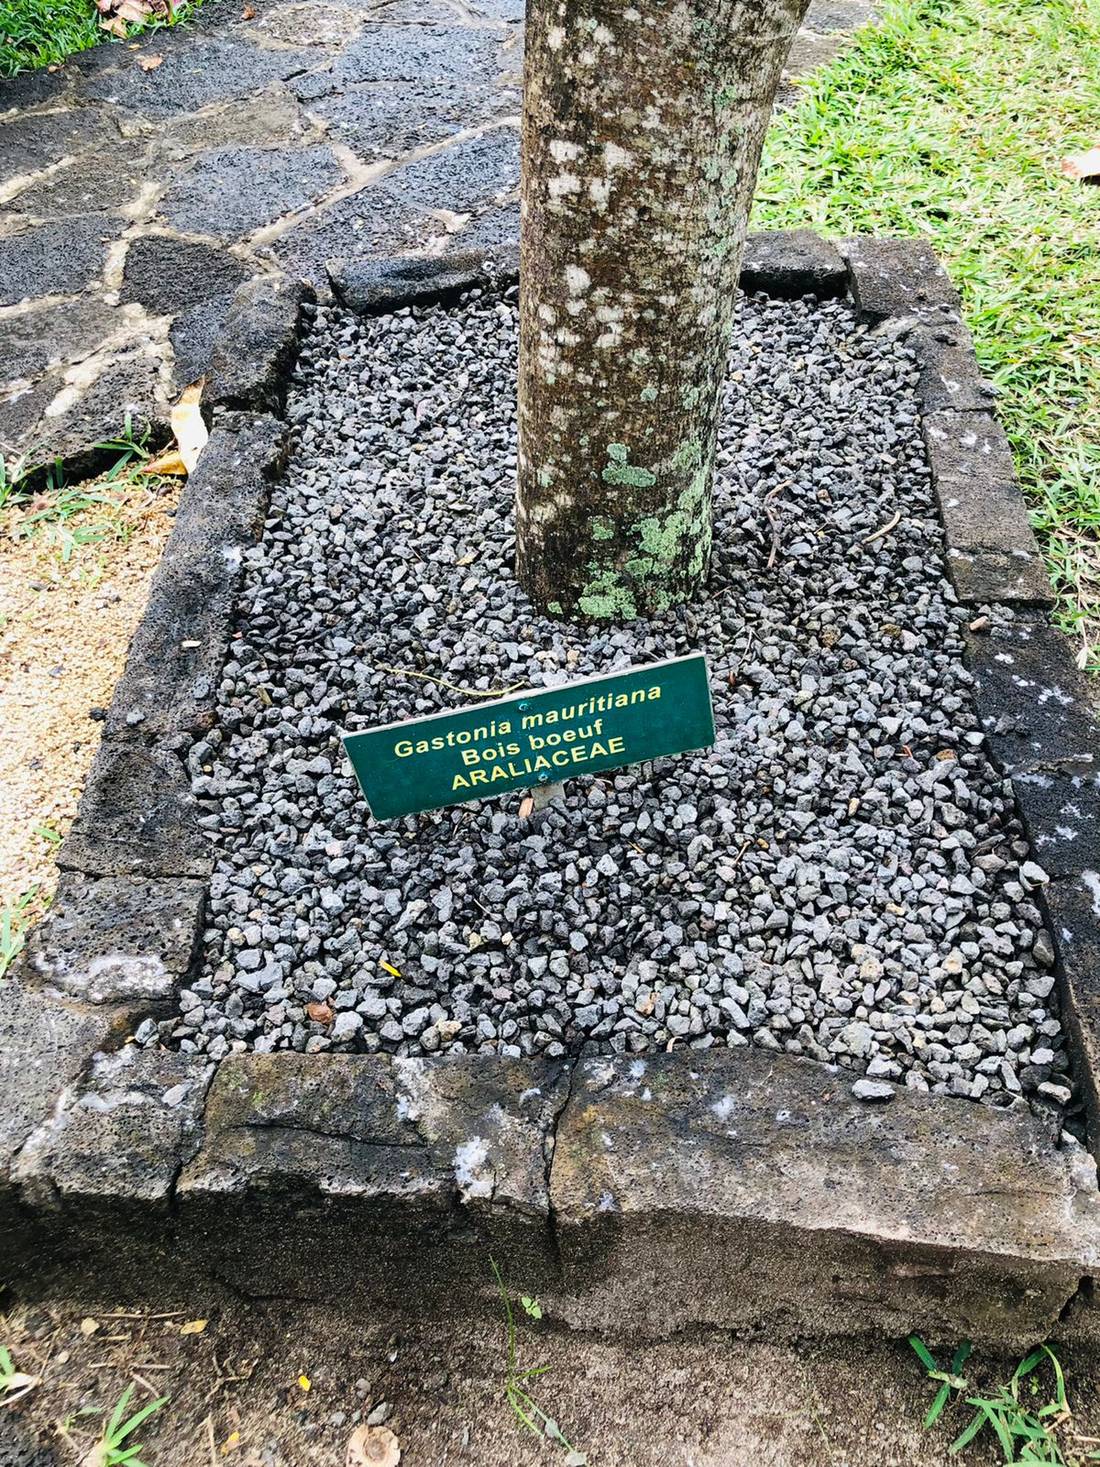 Bois Boeuf - a tree endemic to the island of Mauritius.